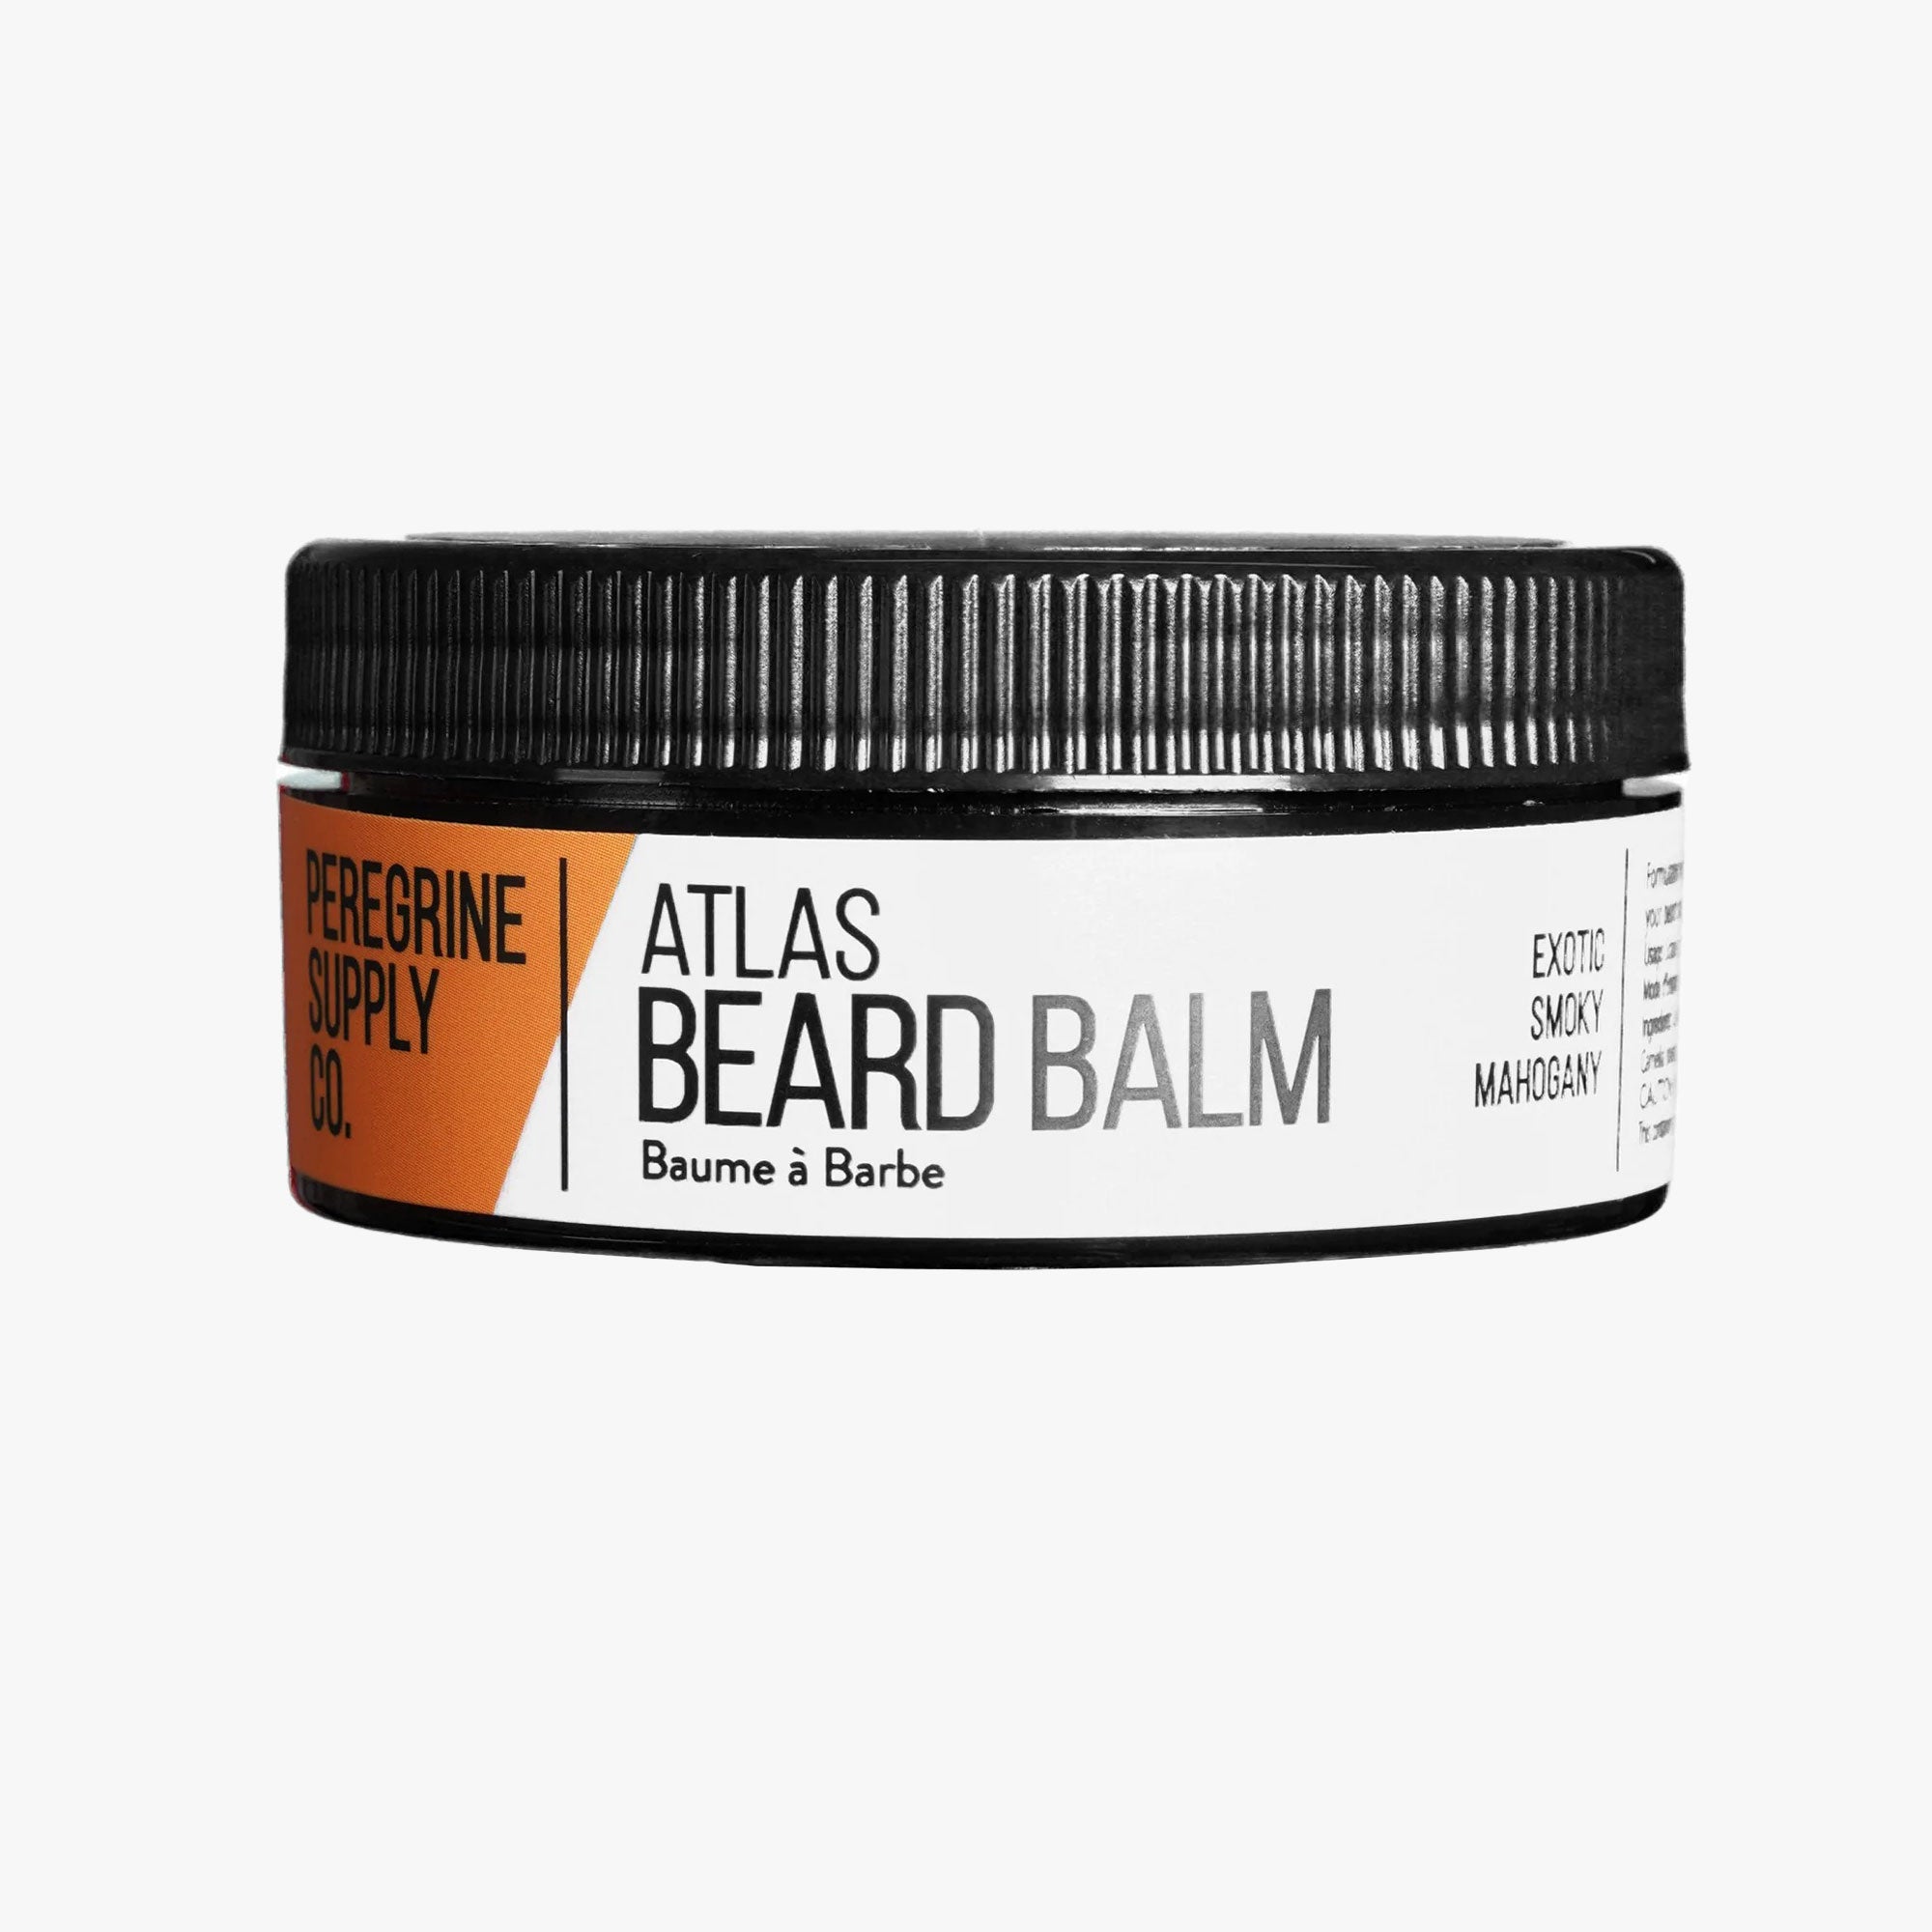 Peregrine Supply Co. Atlas Beard Balm